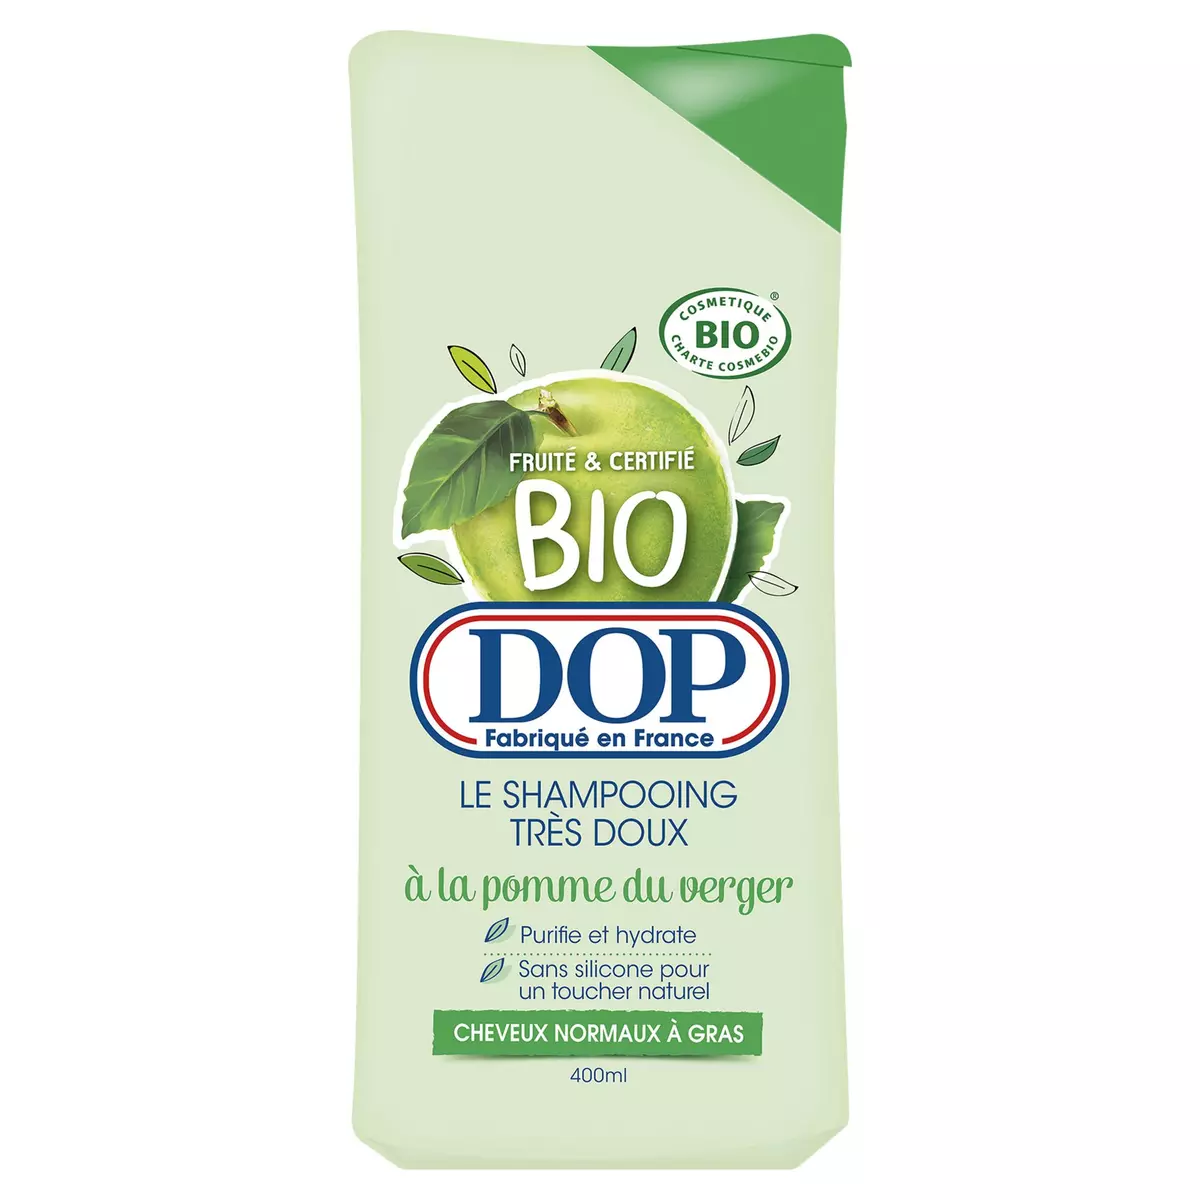 DOP Shampoing bio pomme du verger cheveux normaux à gras 400ml